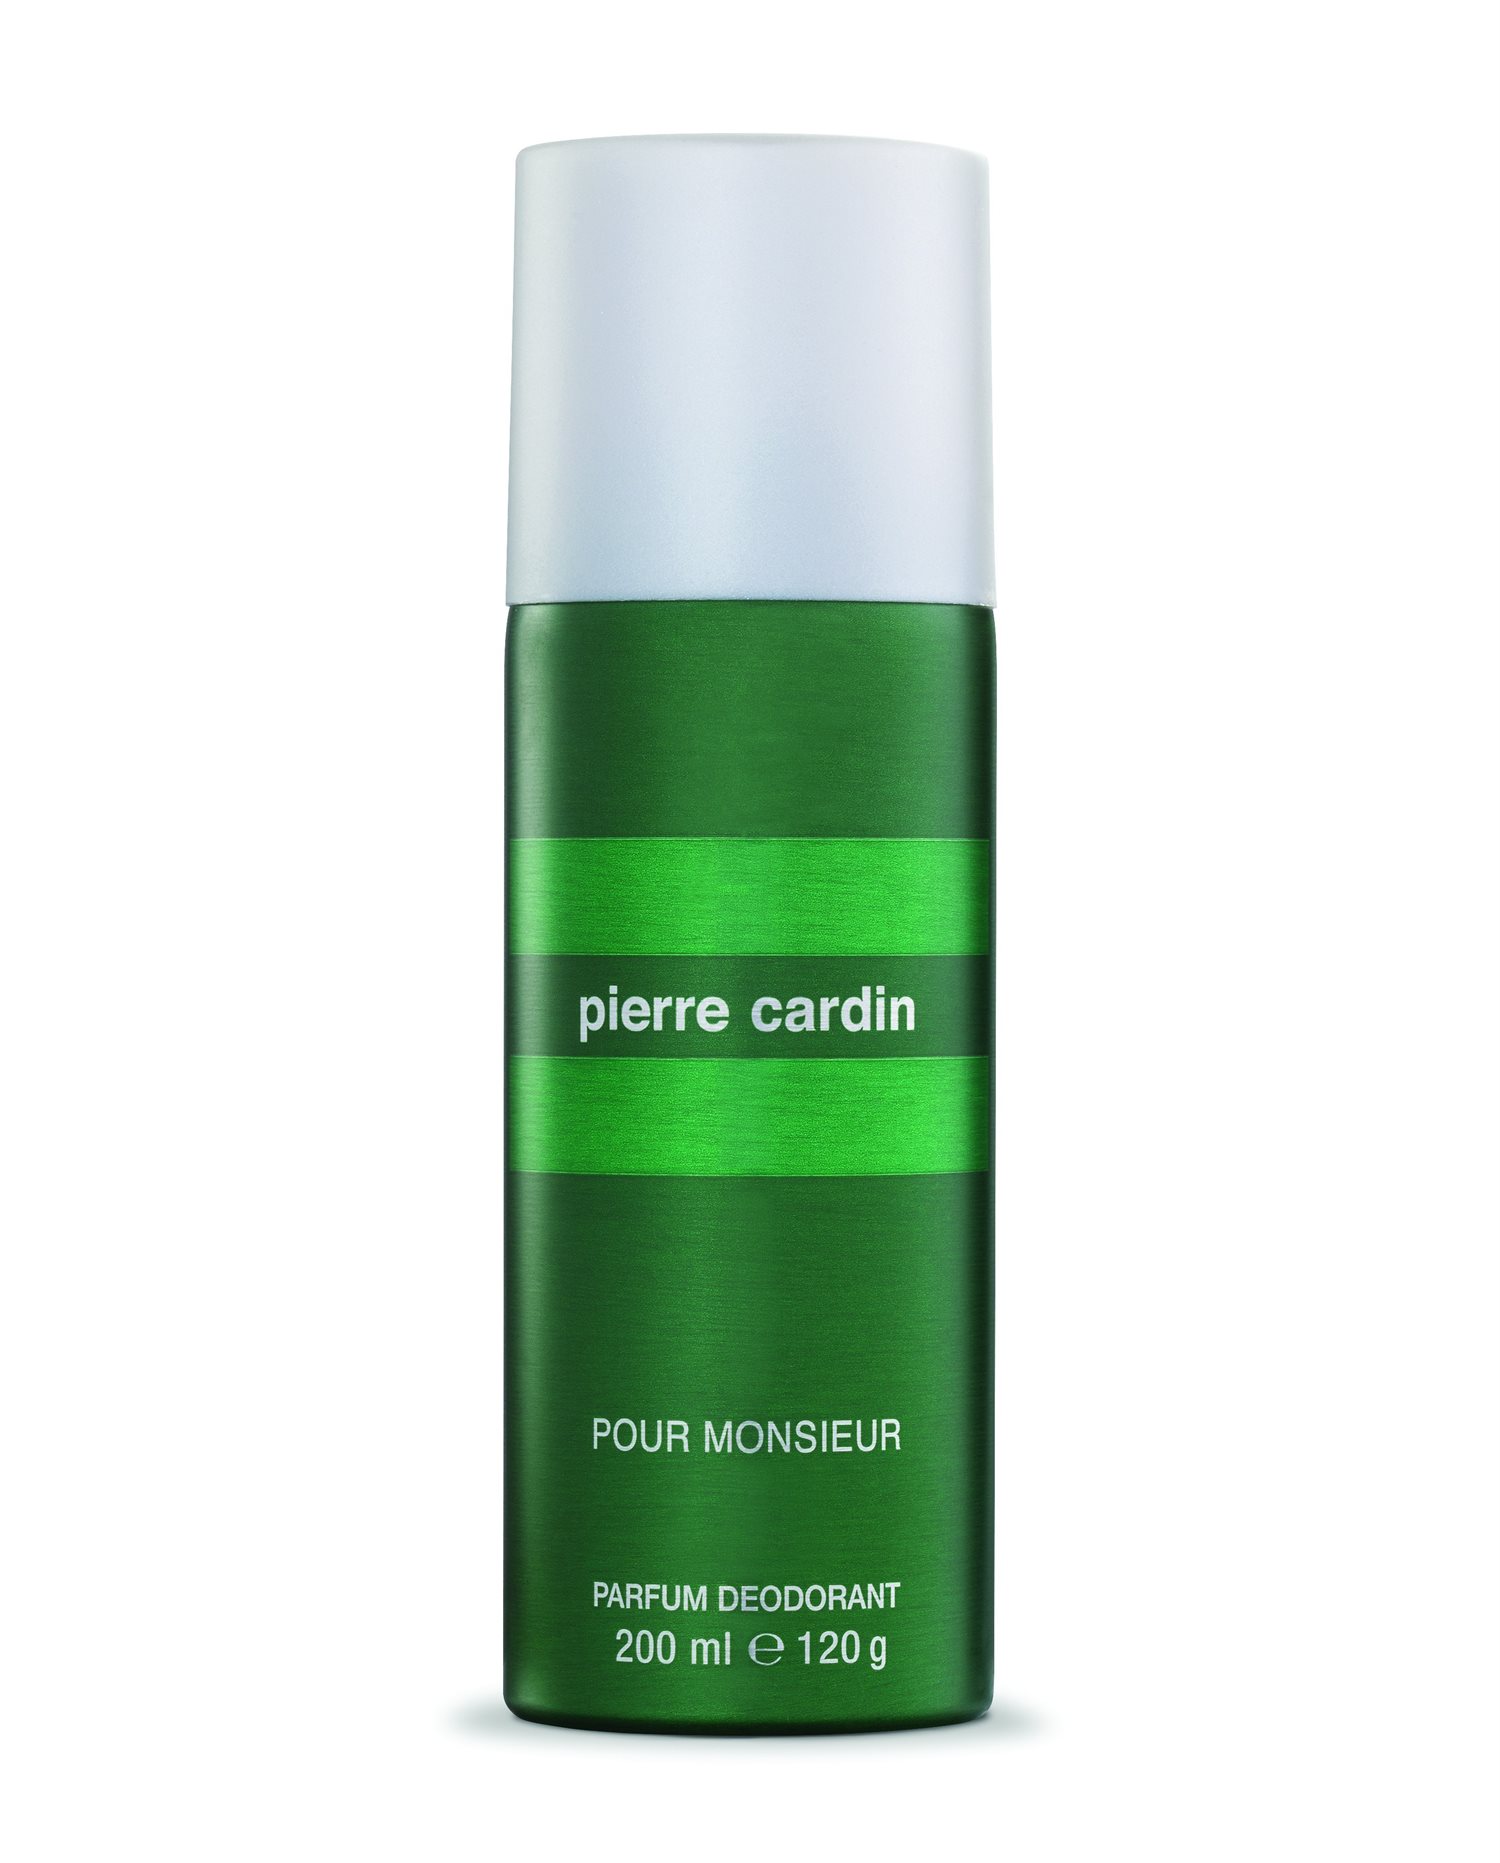 Pierre Cardin Monsieur Deodorant spray 200ml 1-3